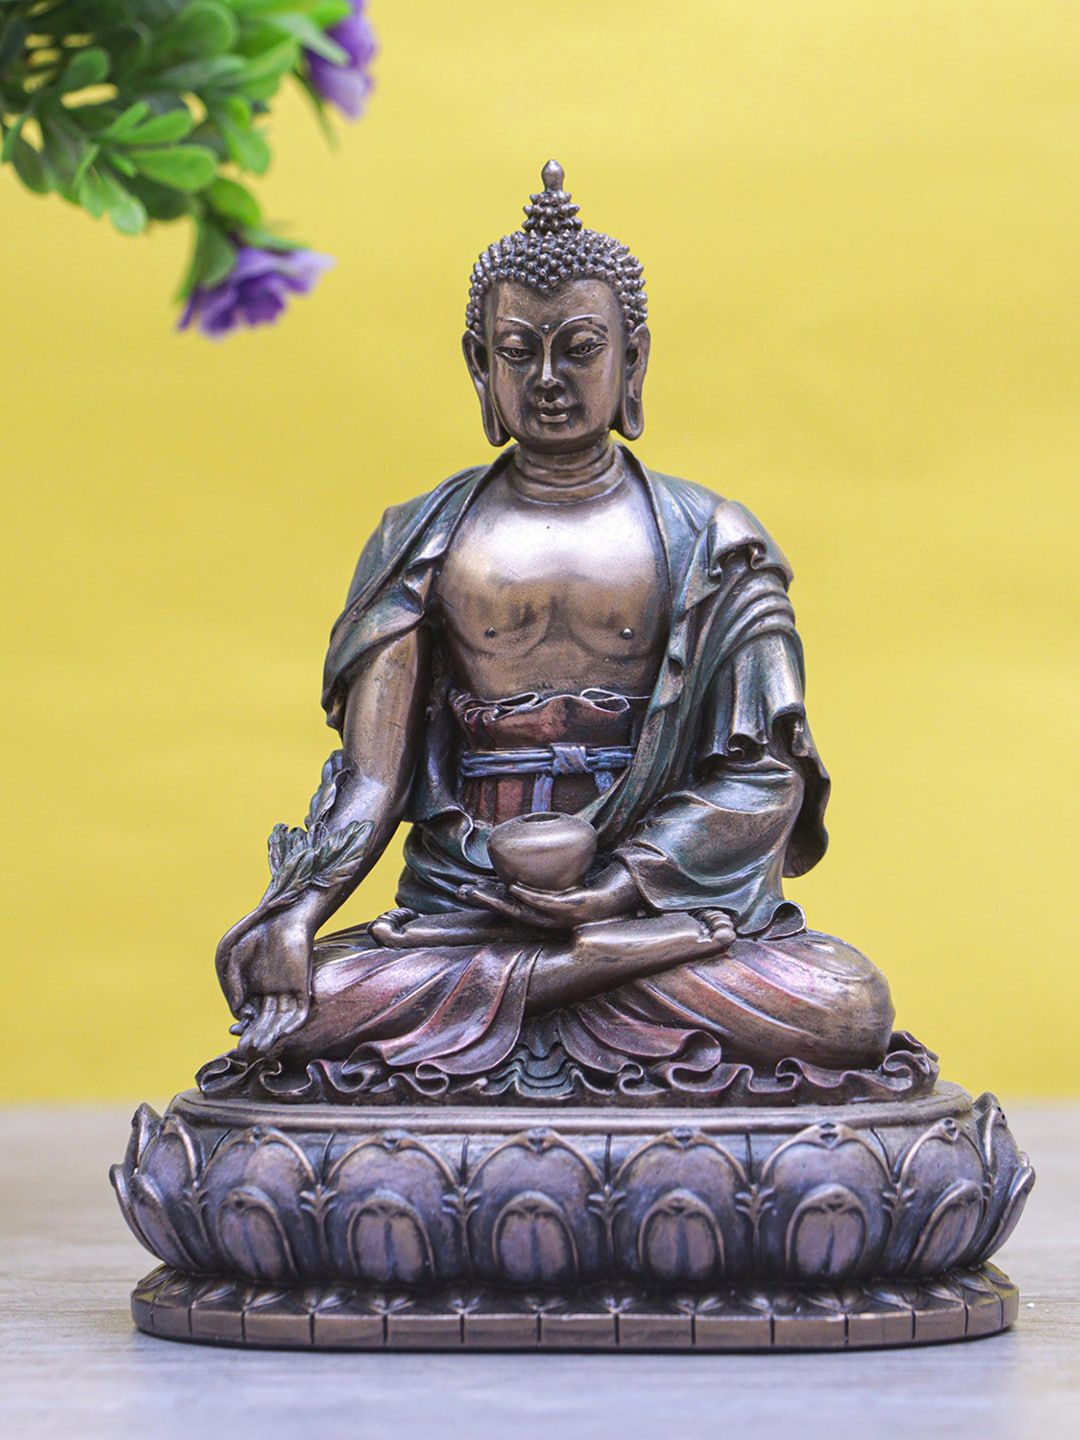 StatueStudio Bronze-Toned Buddha Statue Showpiece Price in India